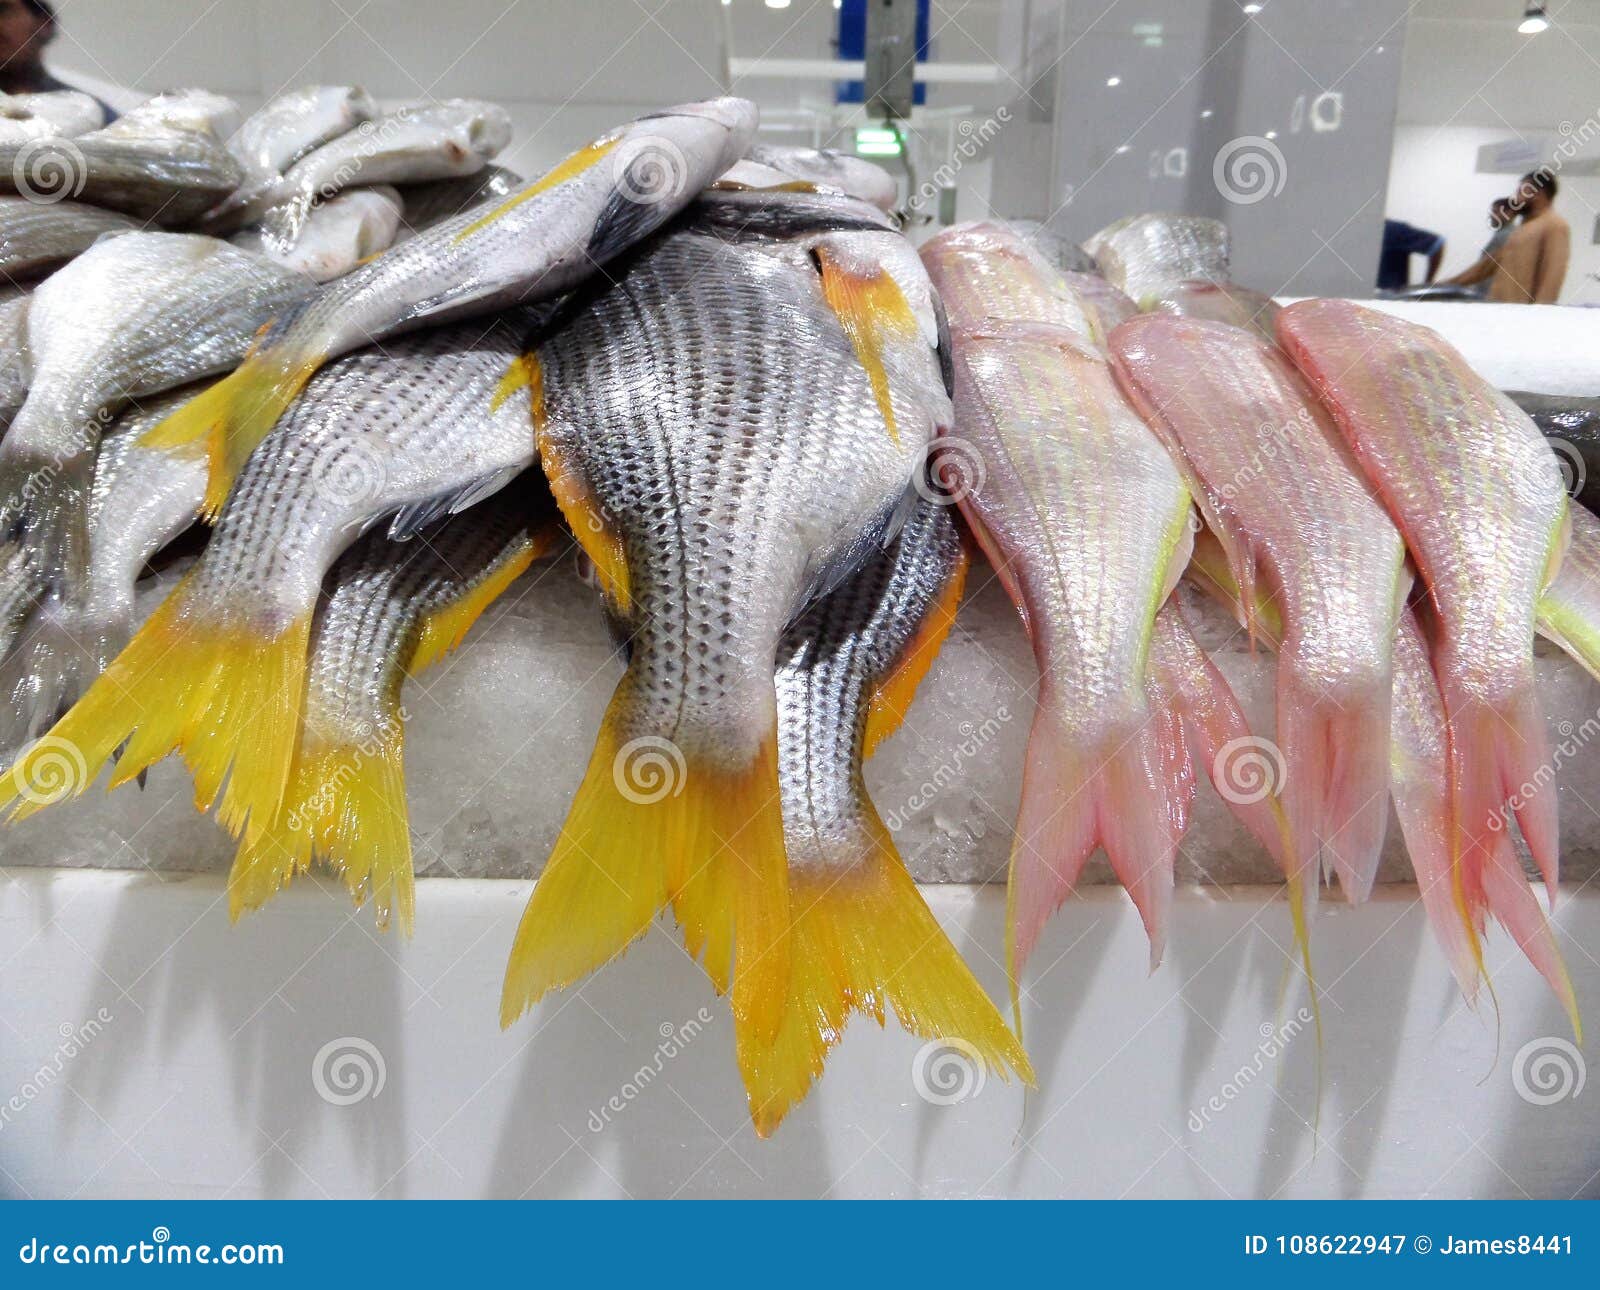 Fresh Fish Displayed at Market of Dubai. Stock Image - Image of industry,  selling: 108622947